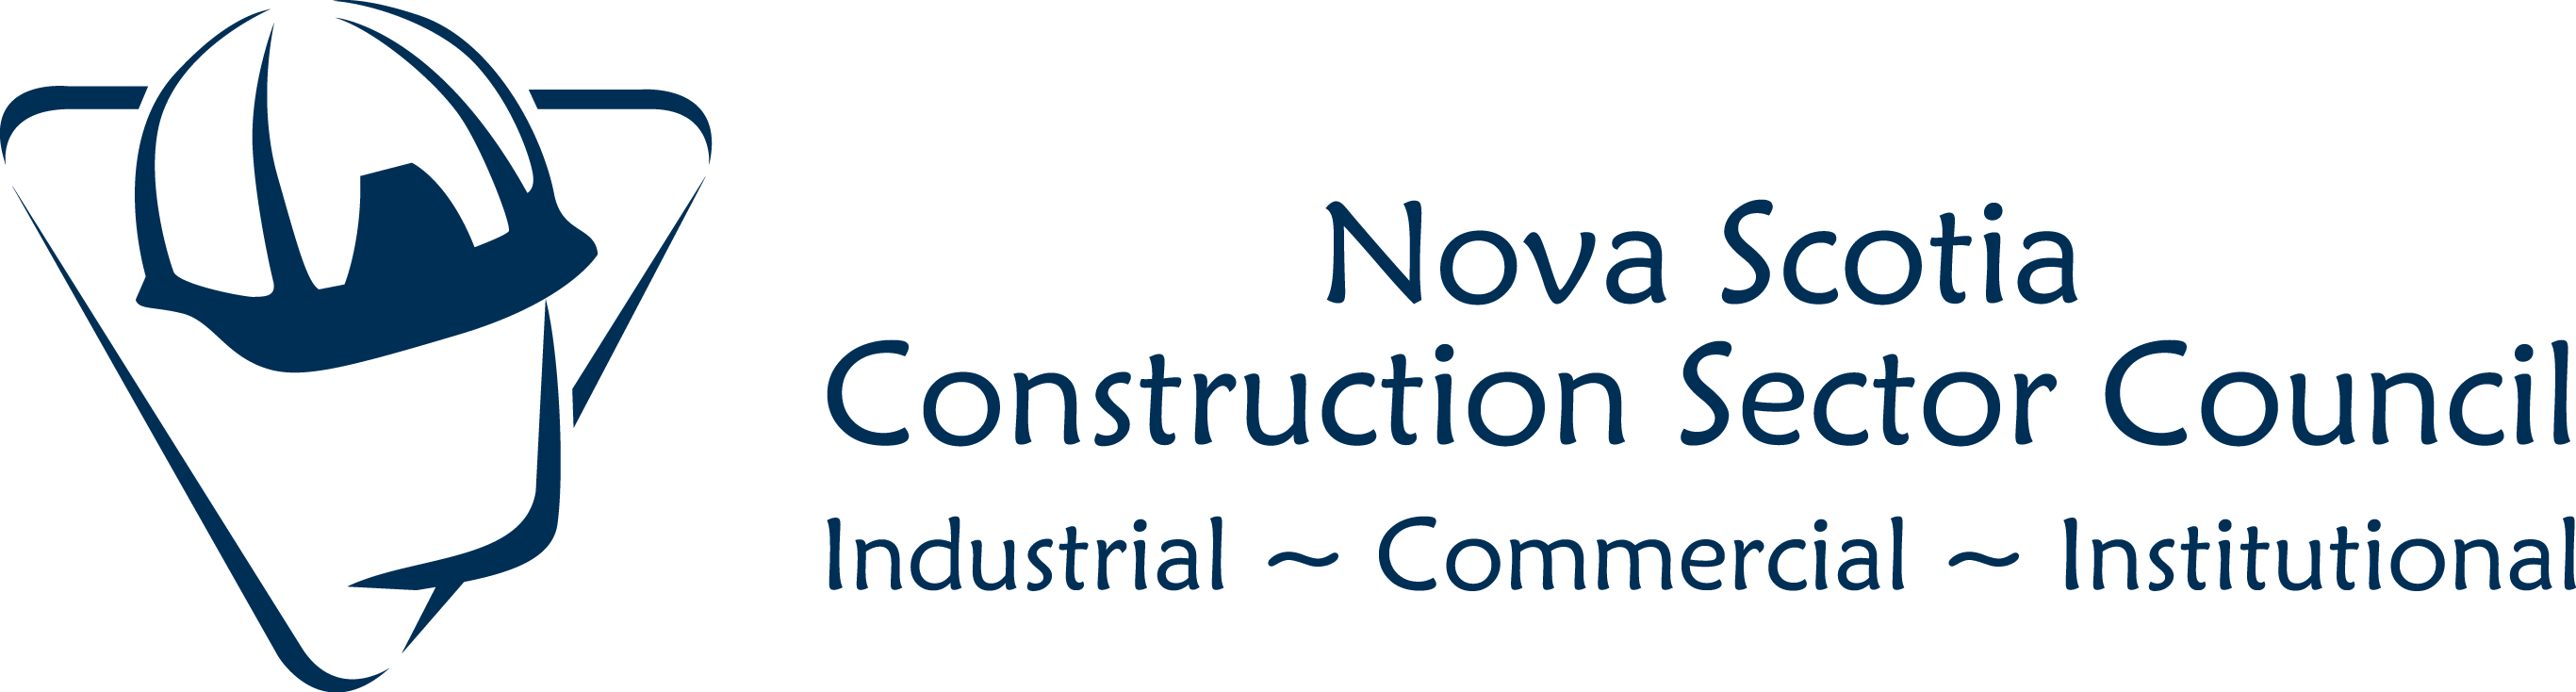 Nova Scotia Construction Sector Council